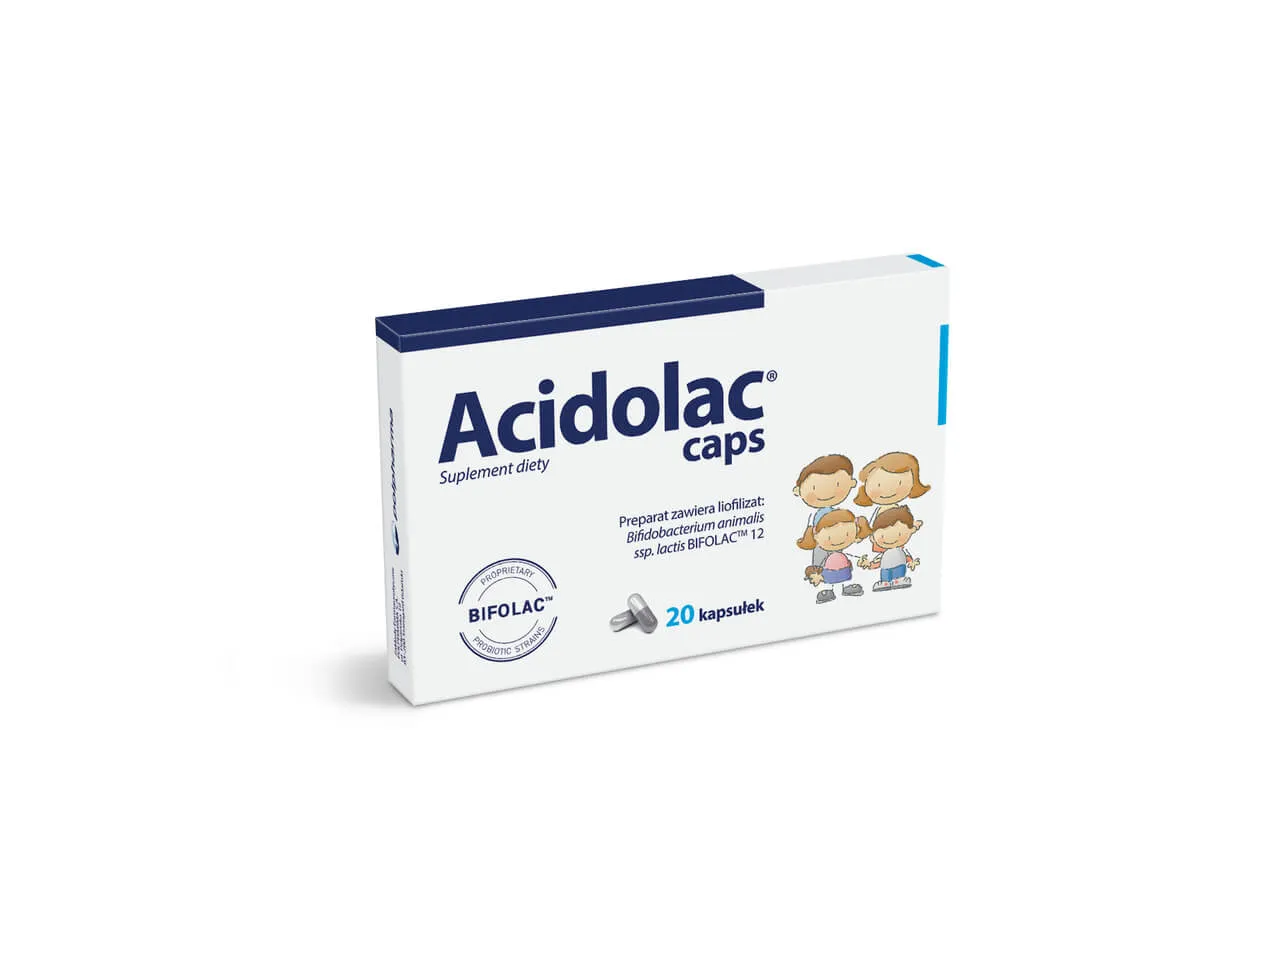 Acidolac Caps, suplement diety, 20 kapsułek